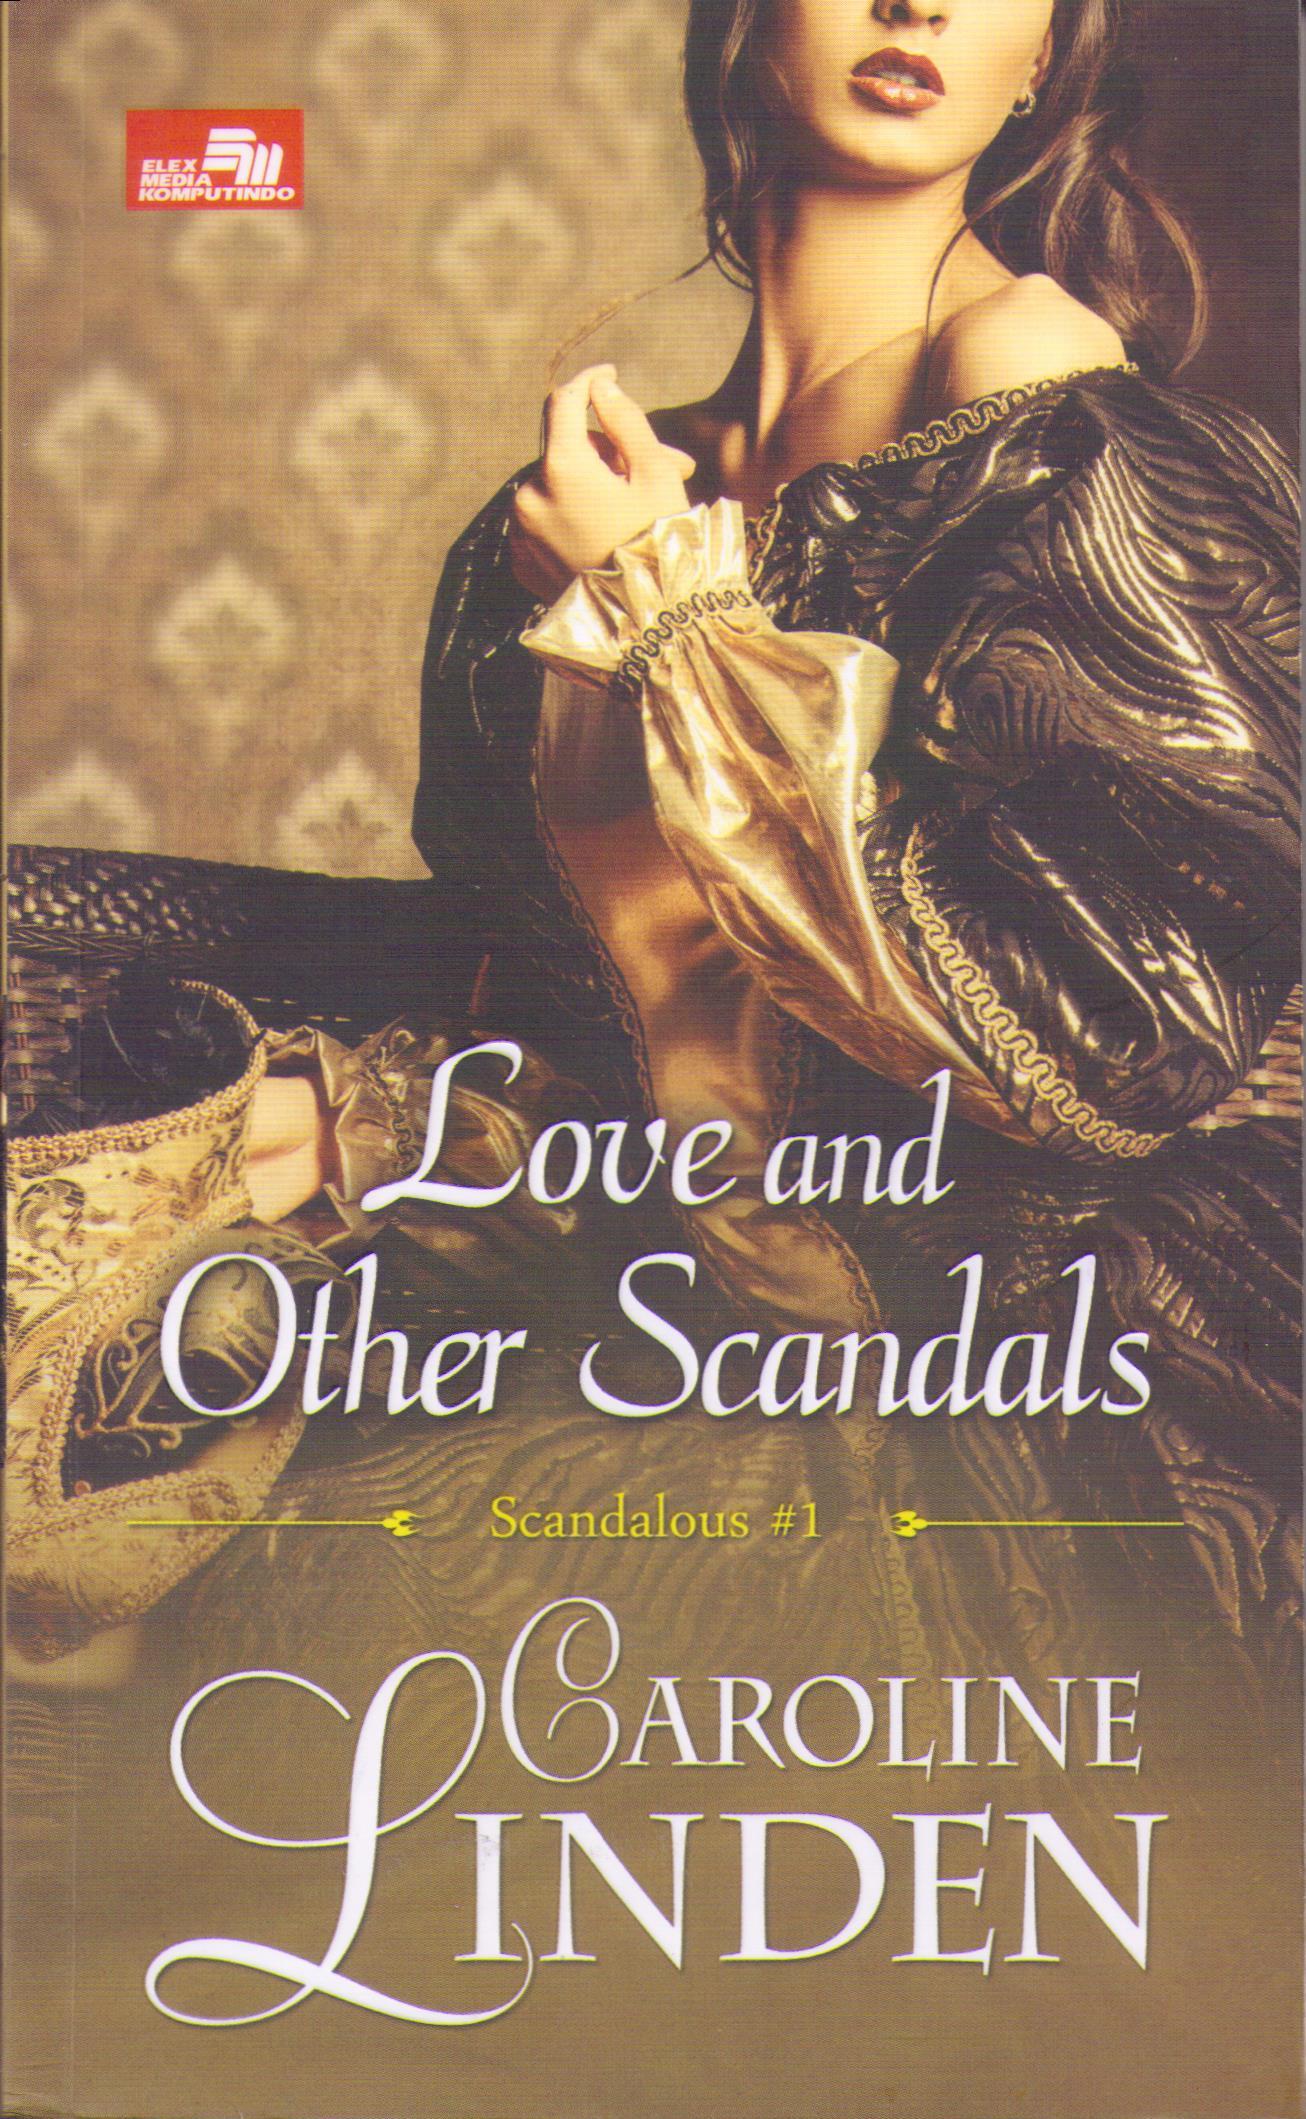 Love and other scandals = antara cinta dan skandal